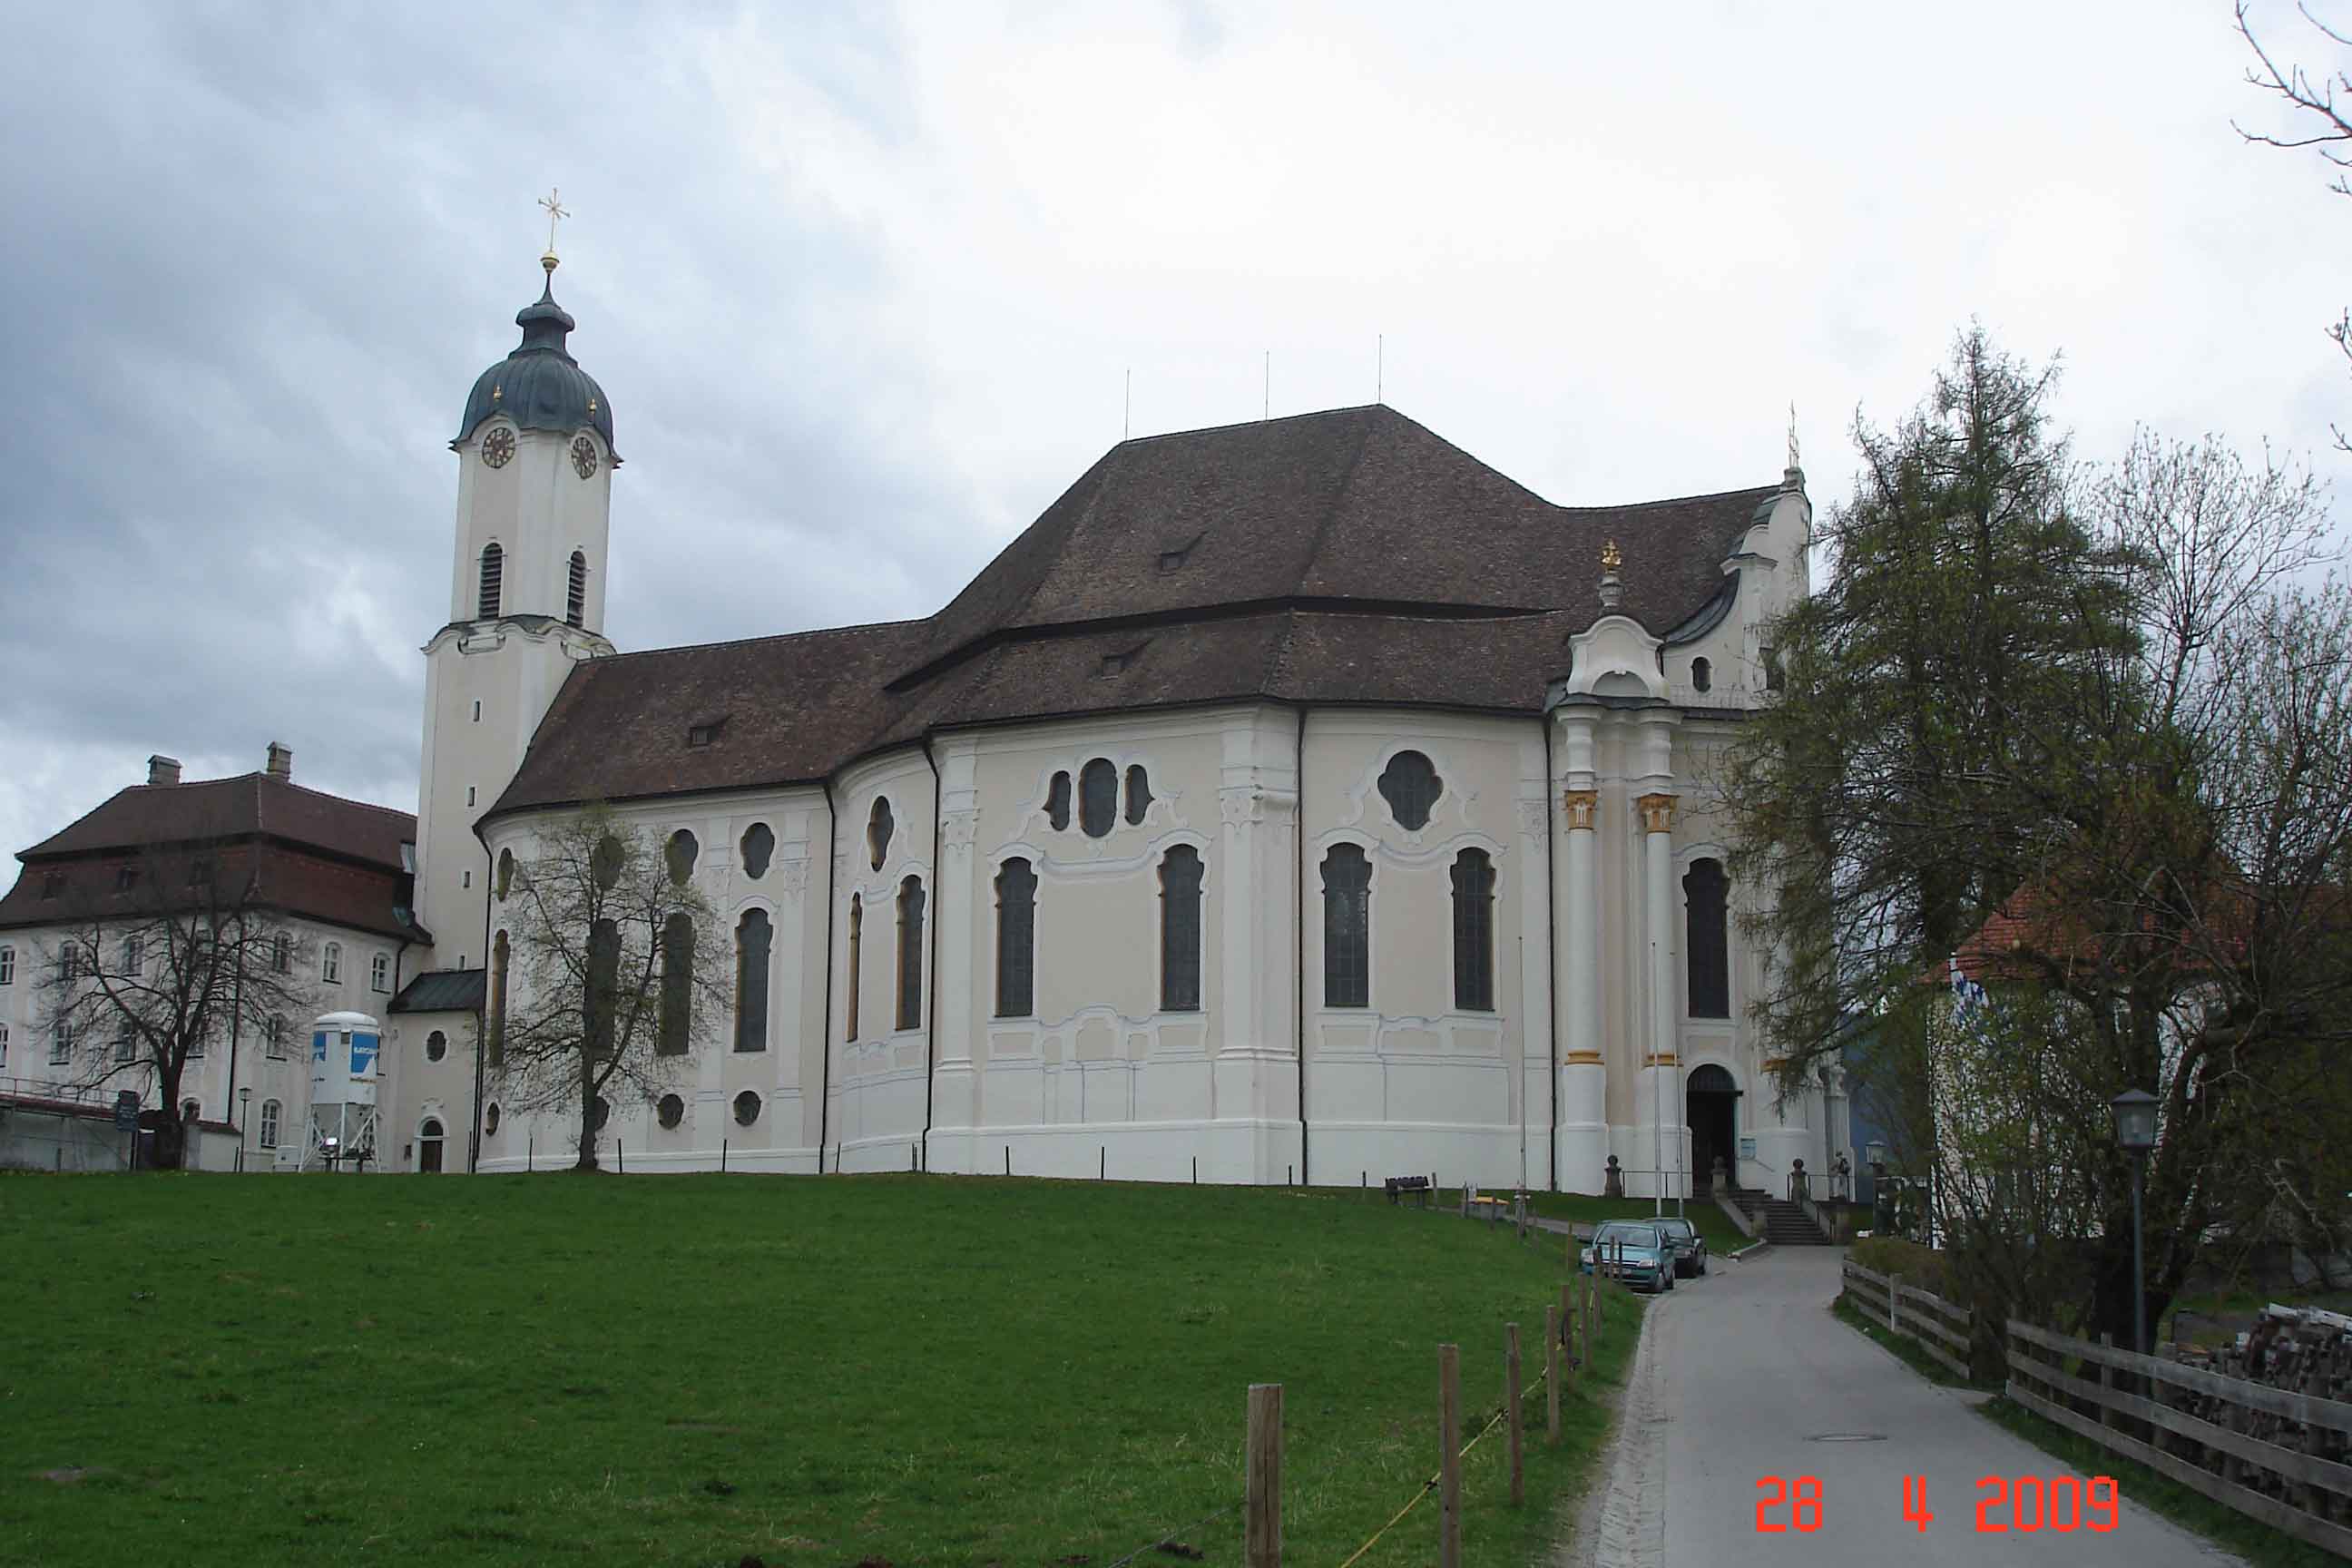 Wieskirche - Pilgrimage Church of the "Scourged Savior"